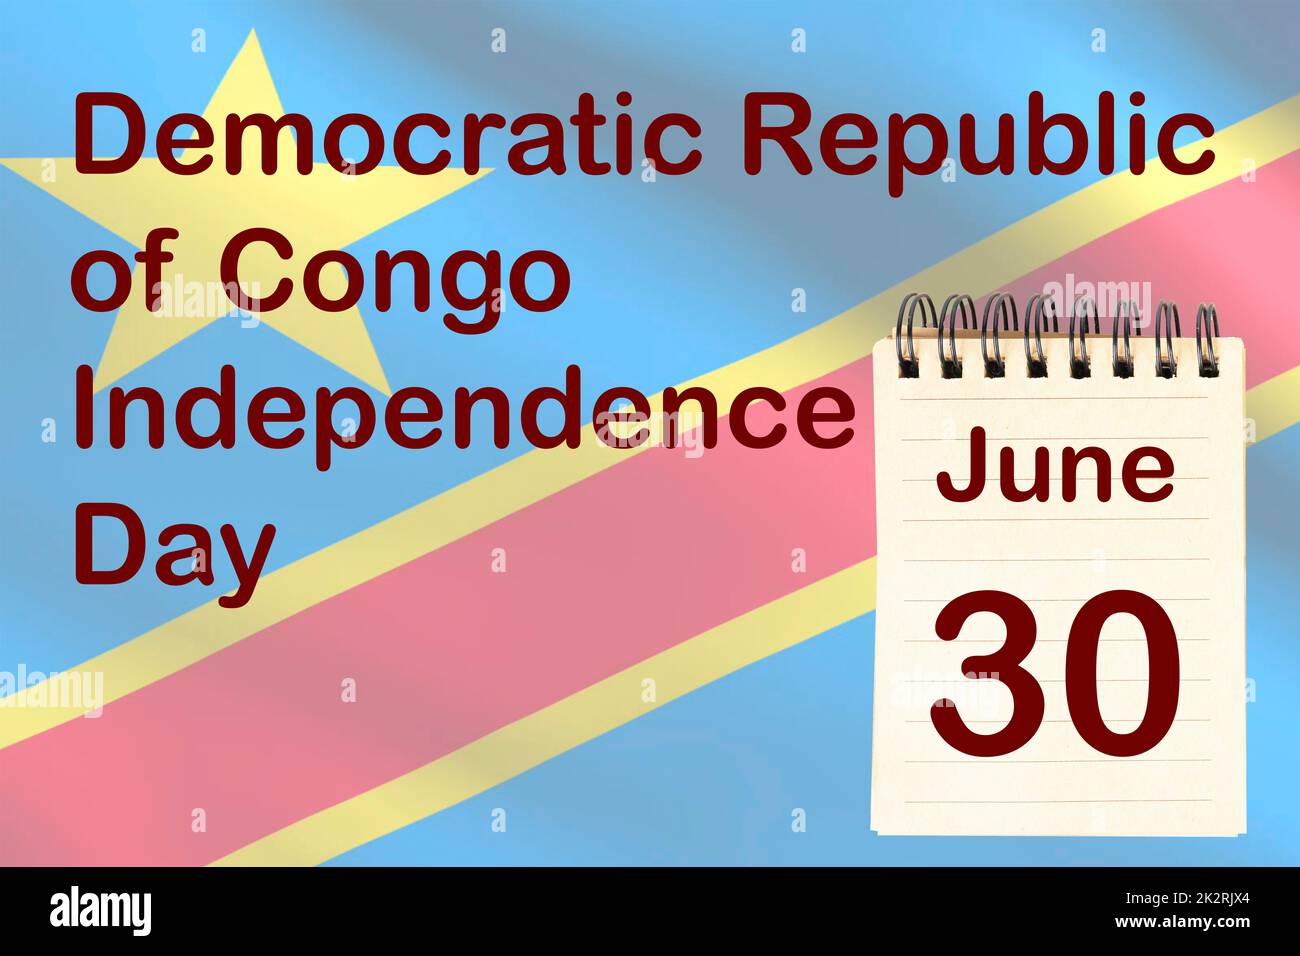 Democratic Republic of Congo Independence Day Stock Photo